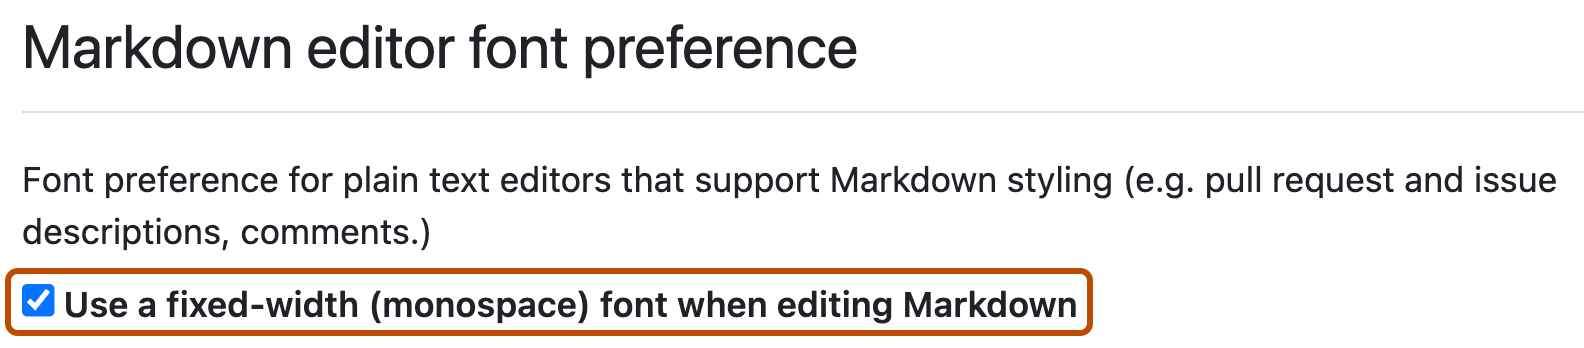 Markdown 기본 설정에 대한 GitHub 사용자 설정 스크린샷 Markdown에서 고정 너비 글꼴을 사용하는 확인란이 진한 주황색 윤곽선으로 표시됩니다.